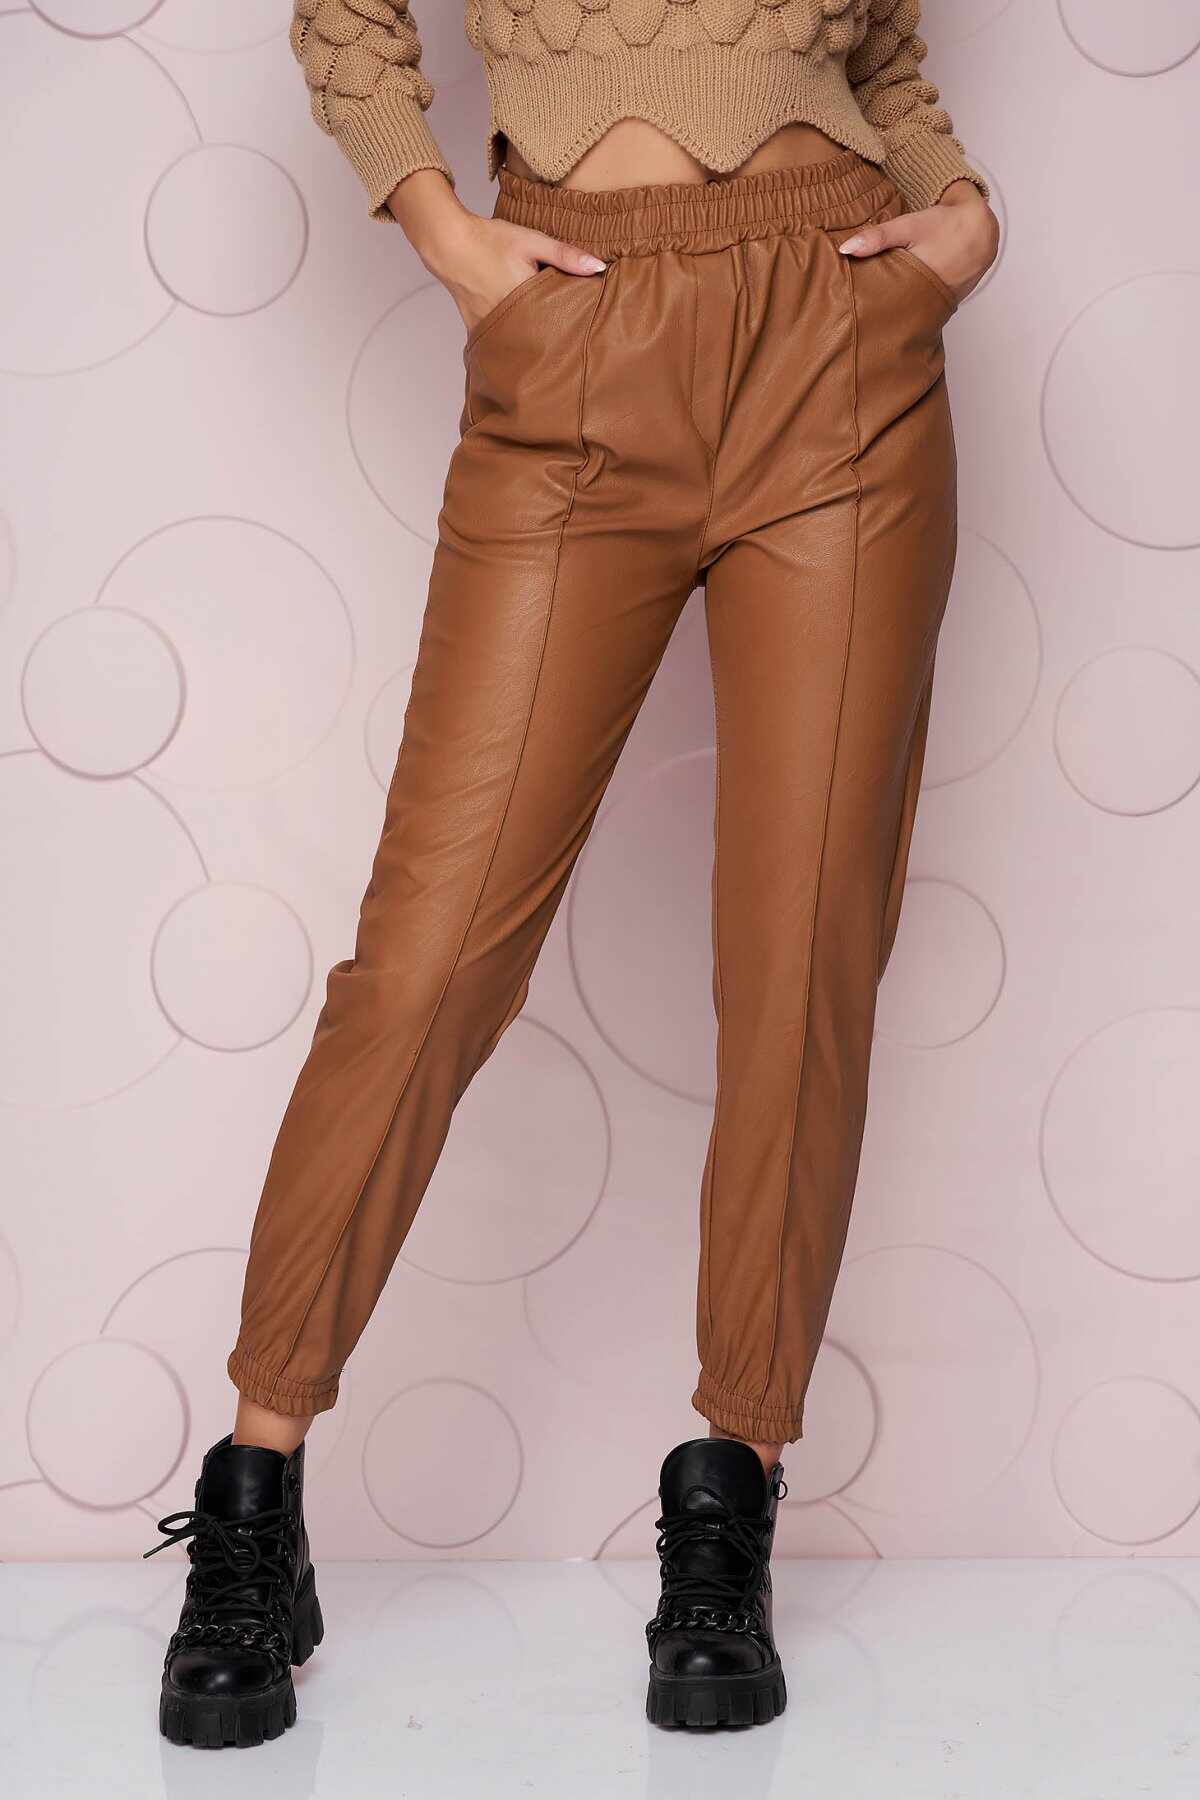 Pantaloni SunShine maro lungi cu croi larg si talie normala din material din piele ecologica elastica si buzunare laterale